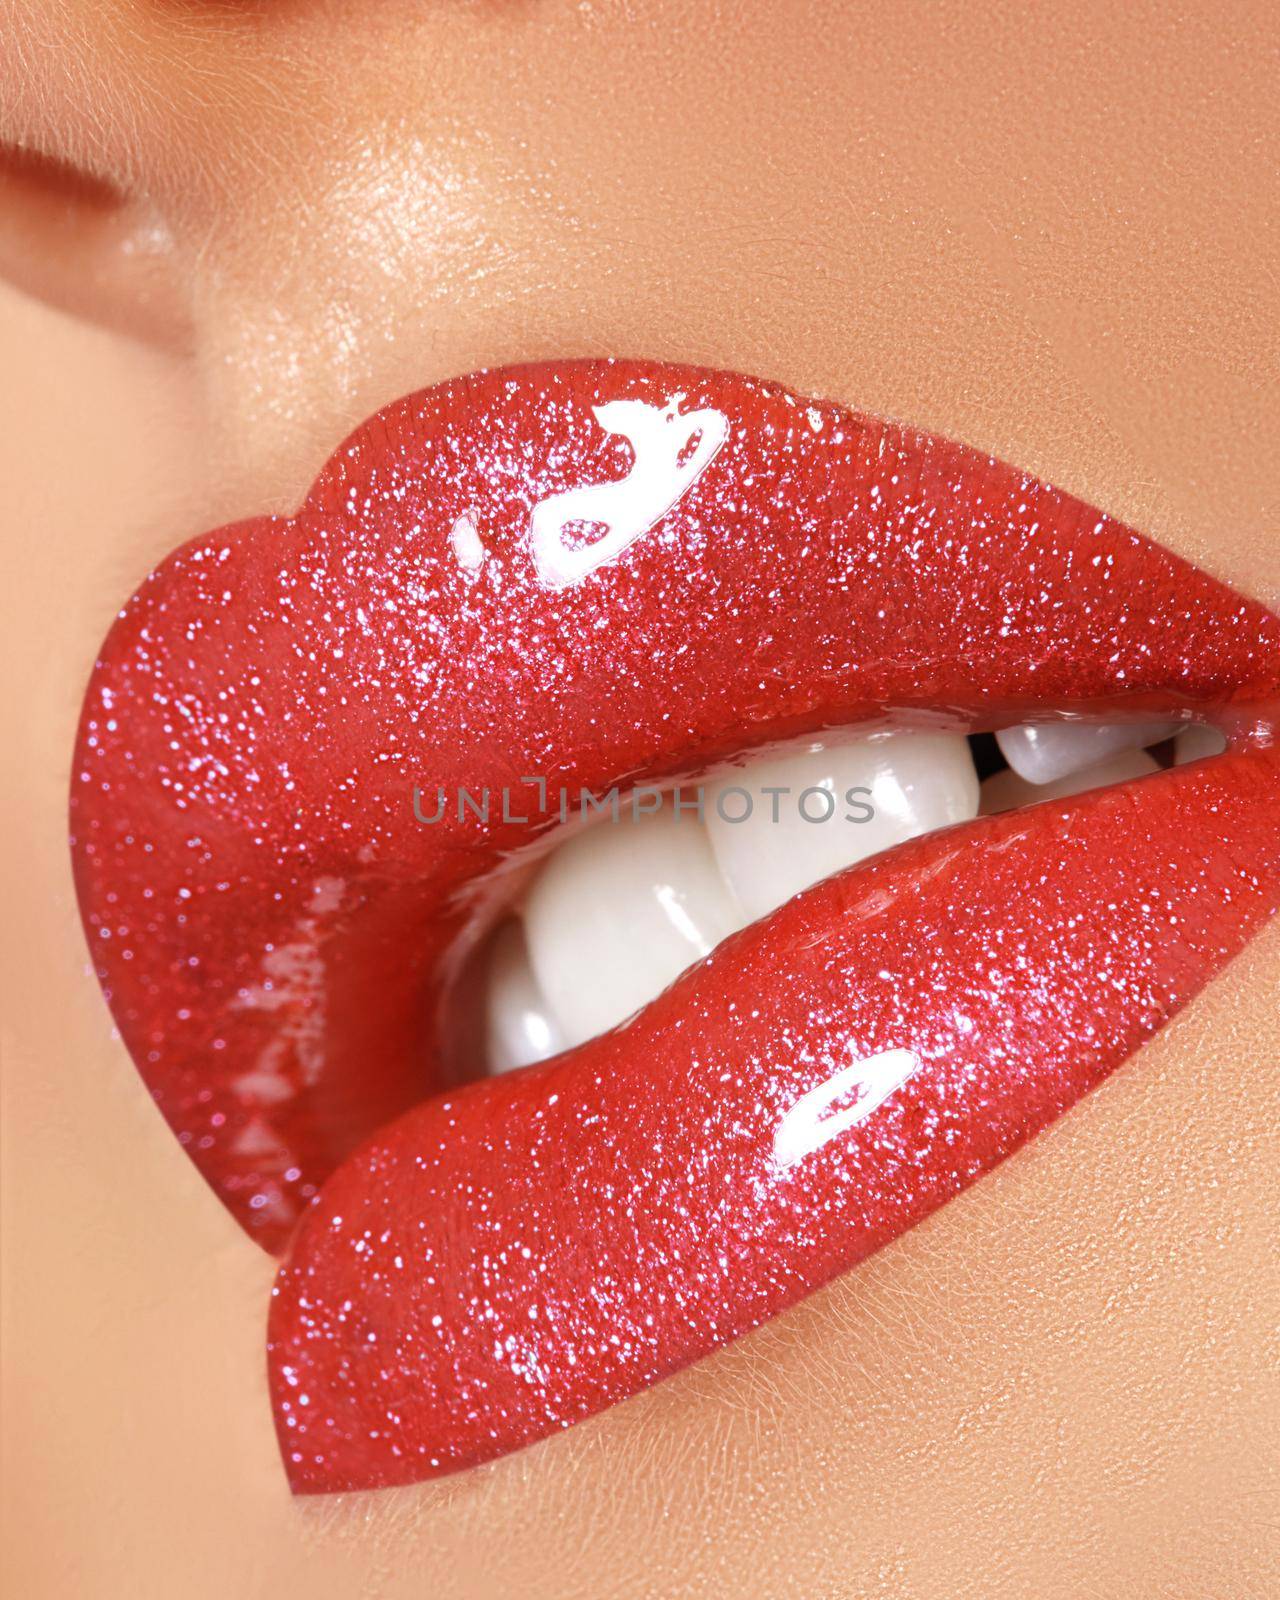 Beautiful Woman Lips with Fashion Lipstick Makeup. Cosmetic, Fashion Make-Up Concept. Beauty Lip Visage. Passionate kiss. Female Sexy Open Mouth